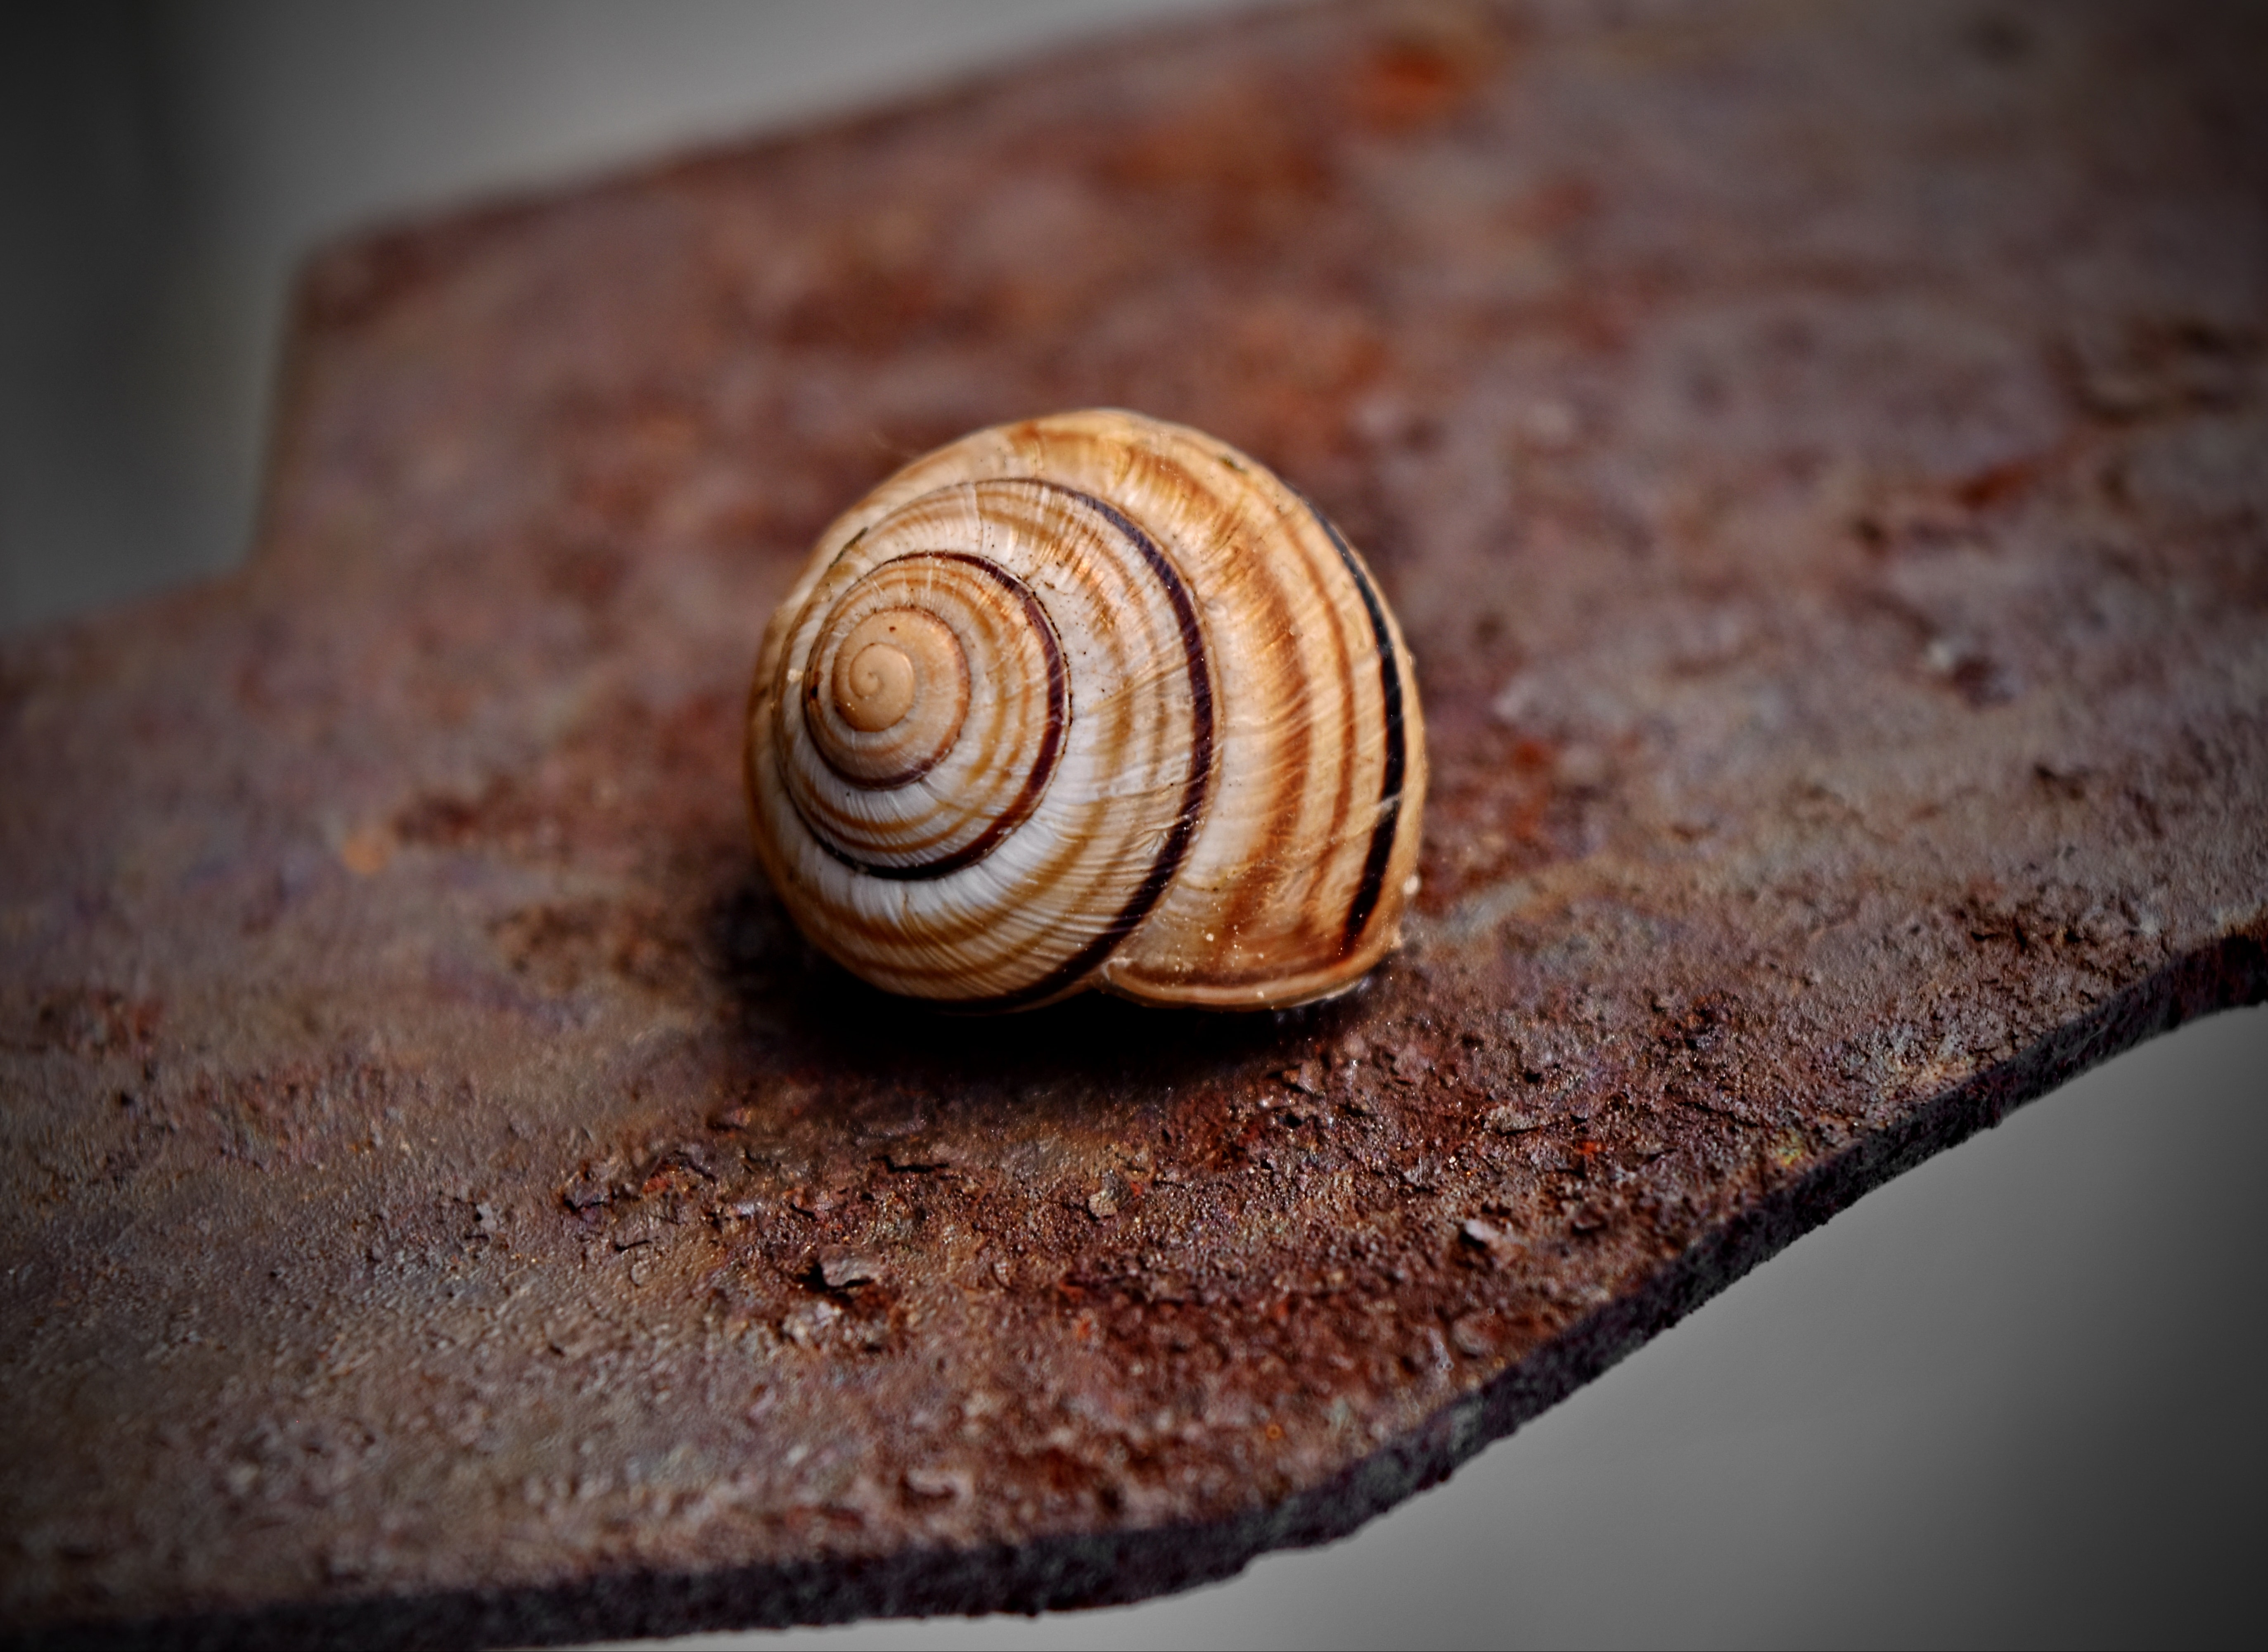 Free picture: snail, animal, light brown, close-up, invertebrate, shell,  spiral, nature, upclose, slug